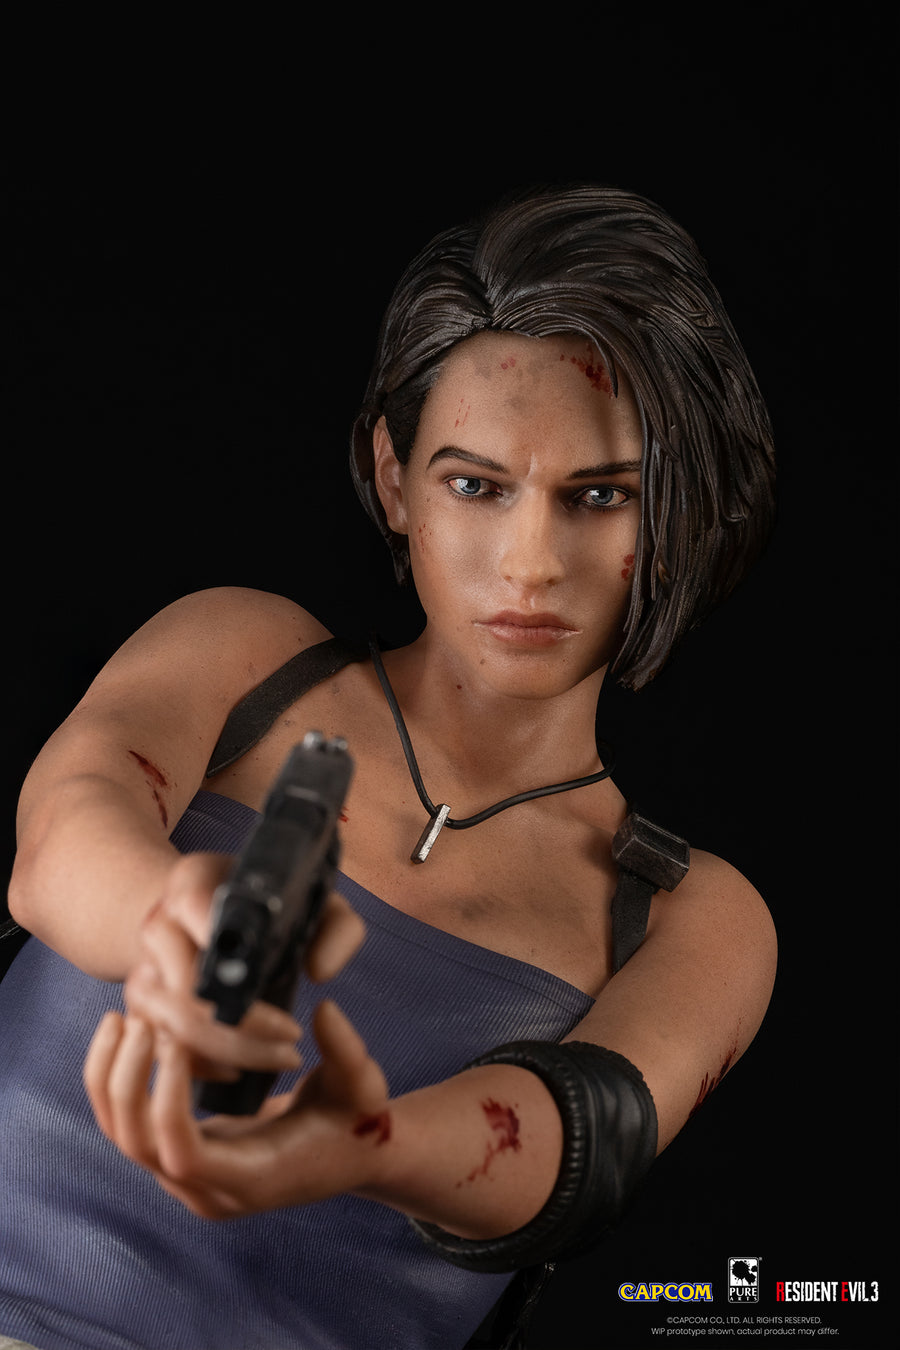 Resident Evil 3 Jill Valentine 1/4 Scale Statue Classic Edition